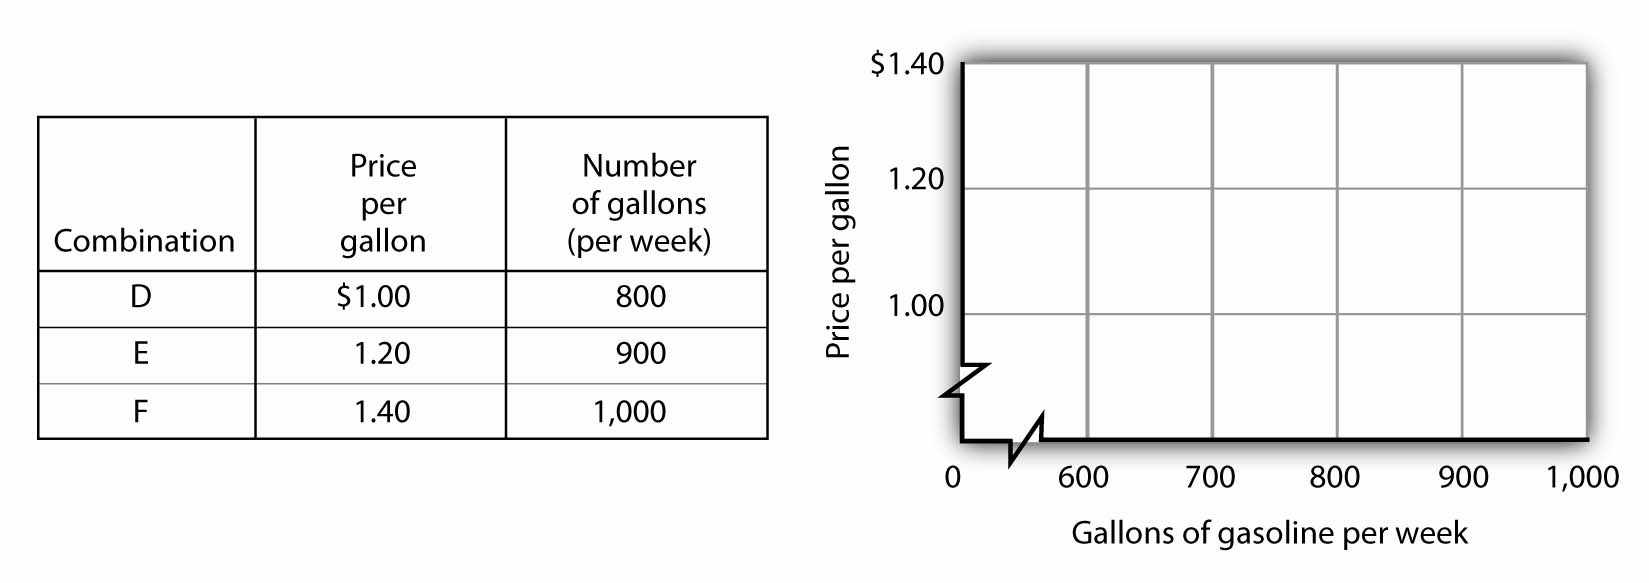 Gallons of gasoline per week